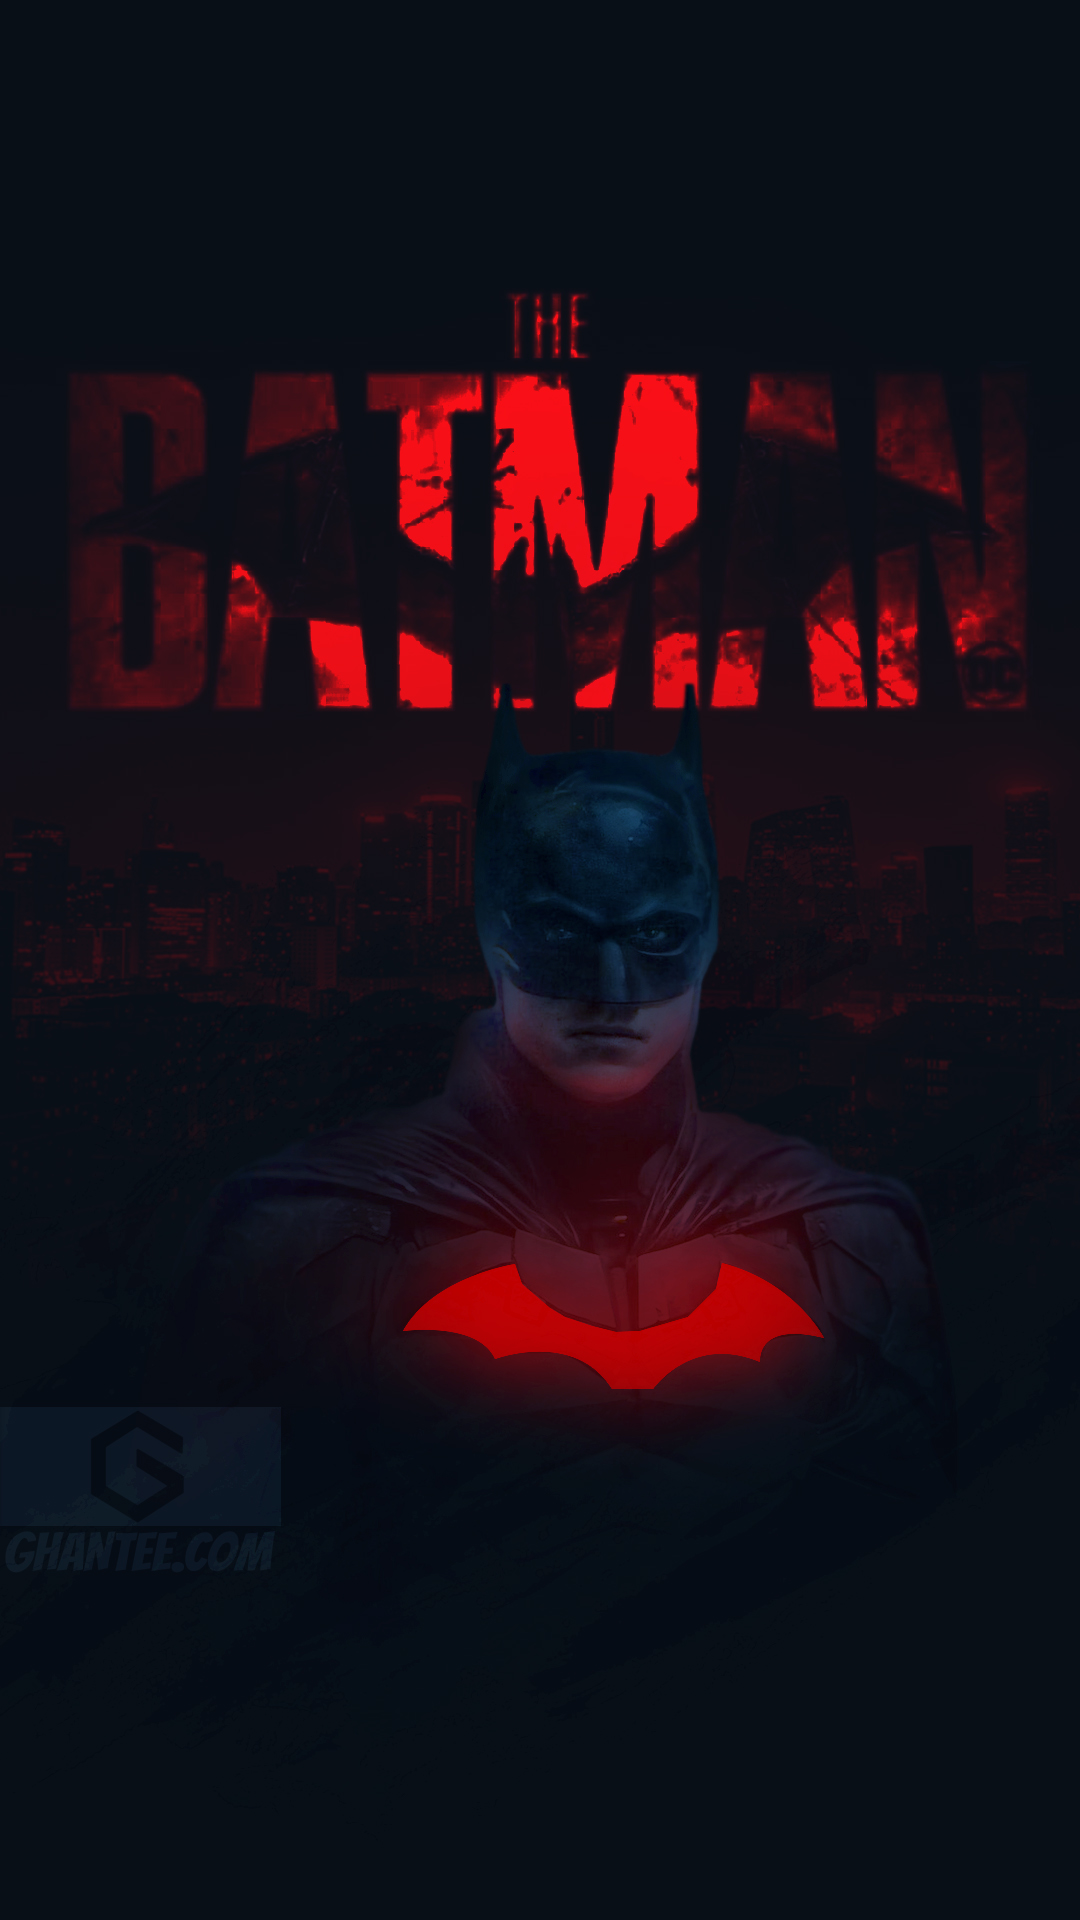 Batman Wallpaper Stylized Black And Red by ghantee on DeviantArt